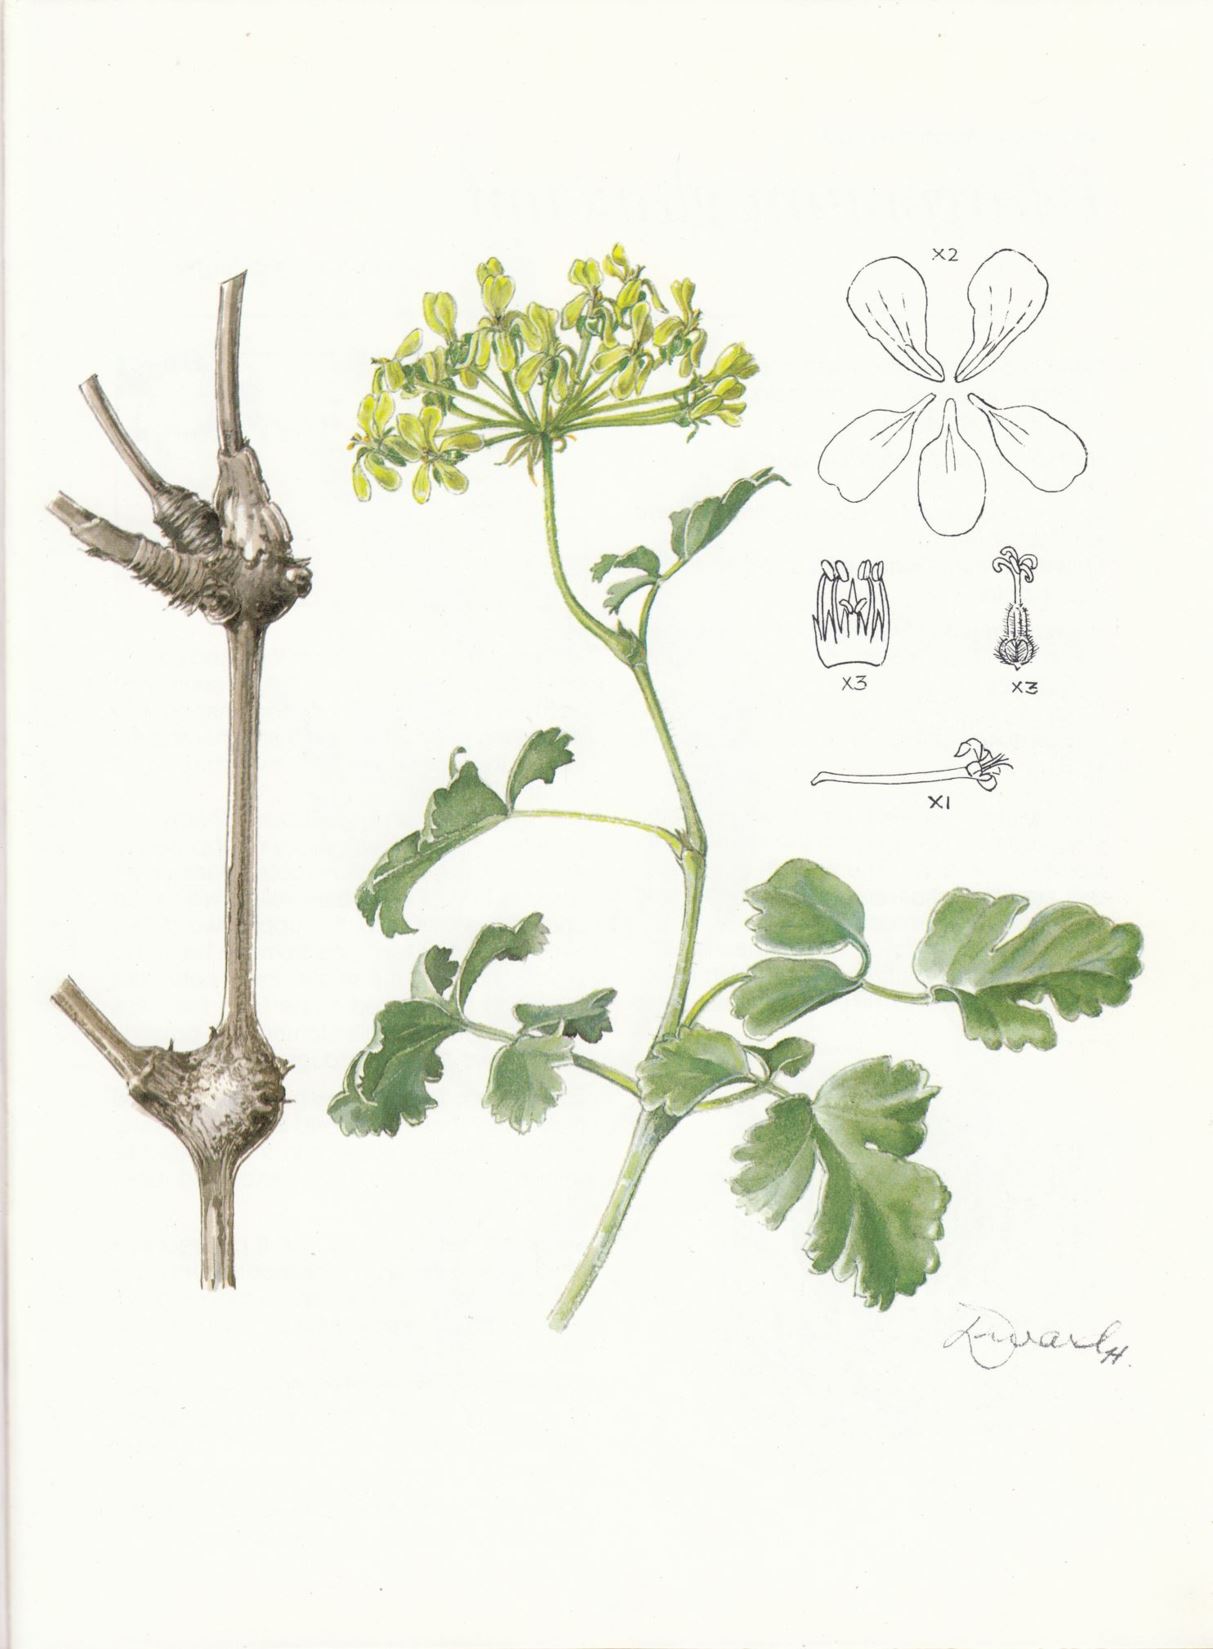 Pelargonium gibbosum - Gouty pelargonium